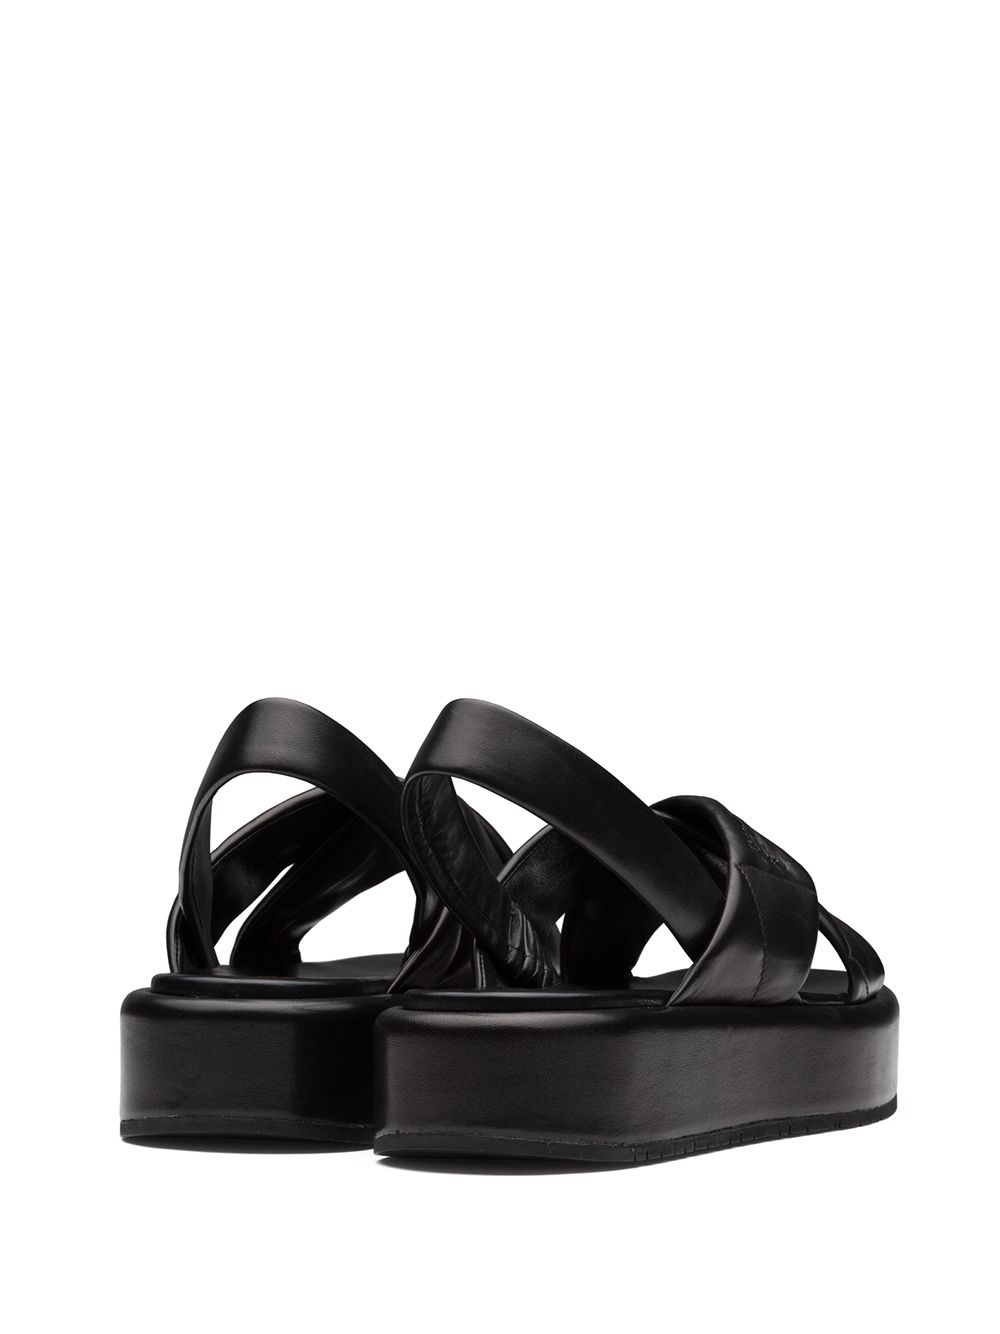 Prada Quilted Flatform Sandals - Farfetch